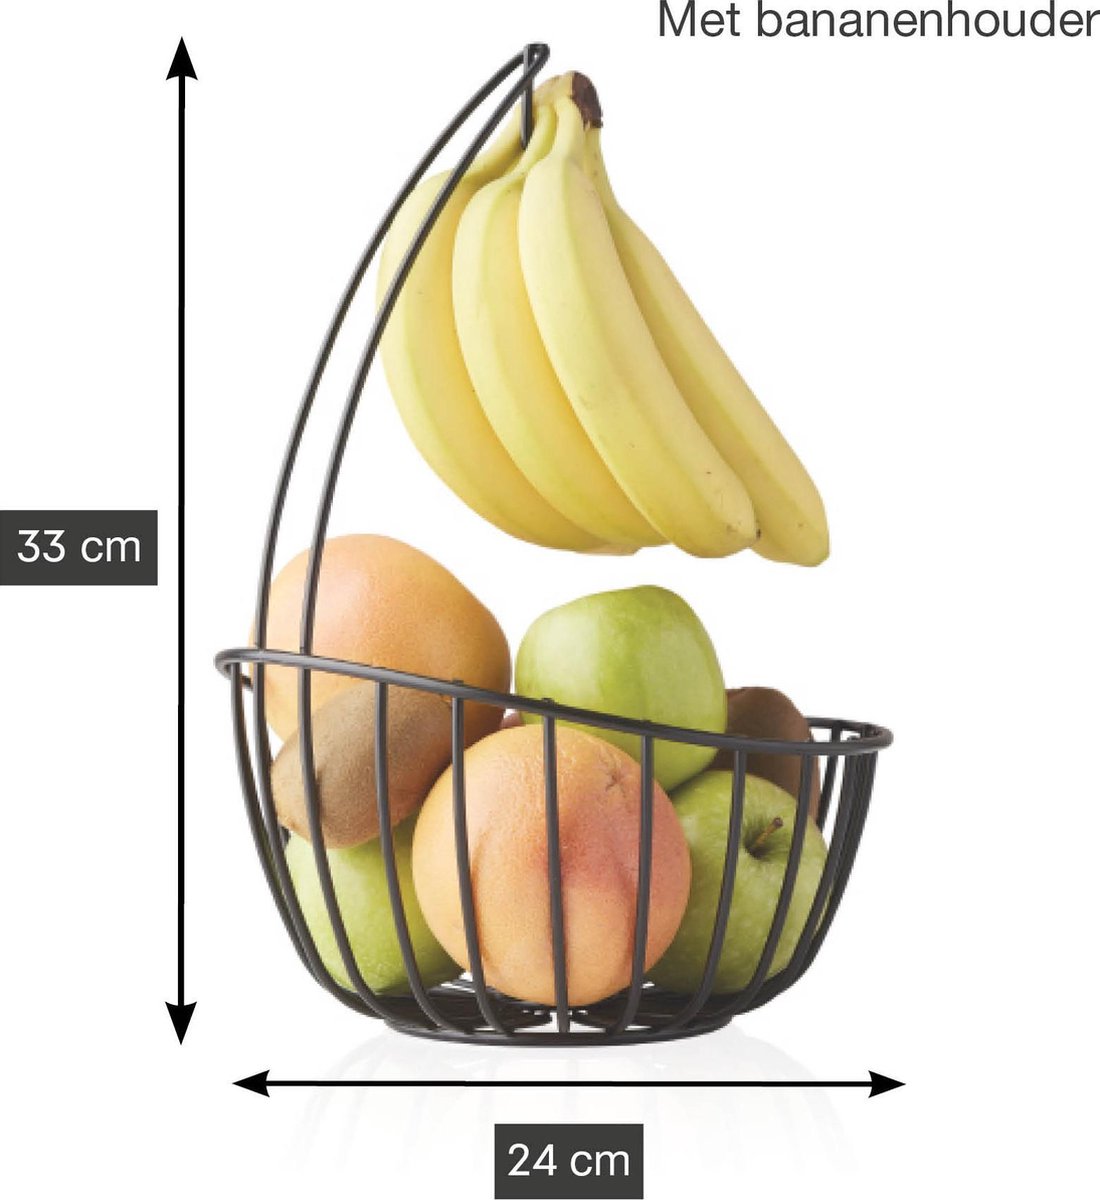 Suspension En Bois Pour Banane, Porte-banane Avec Crochet Durable